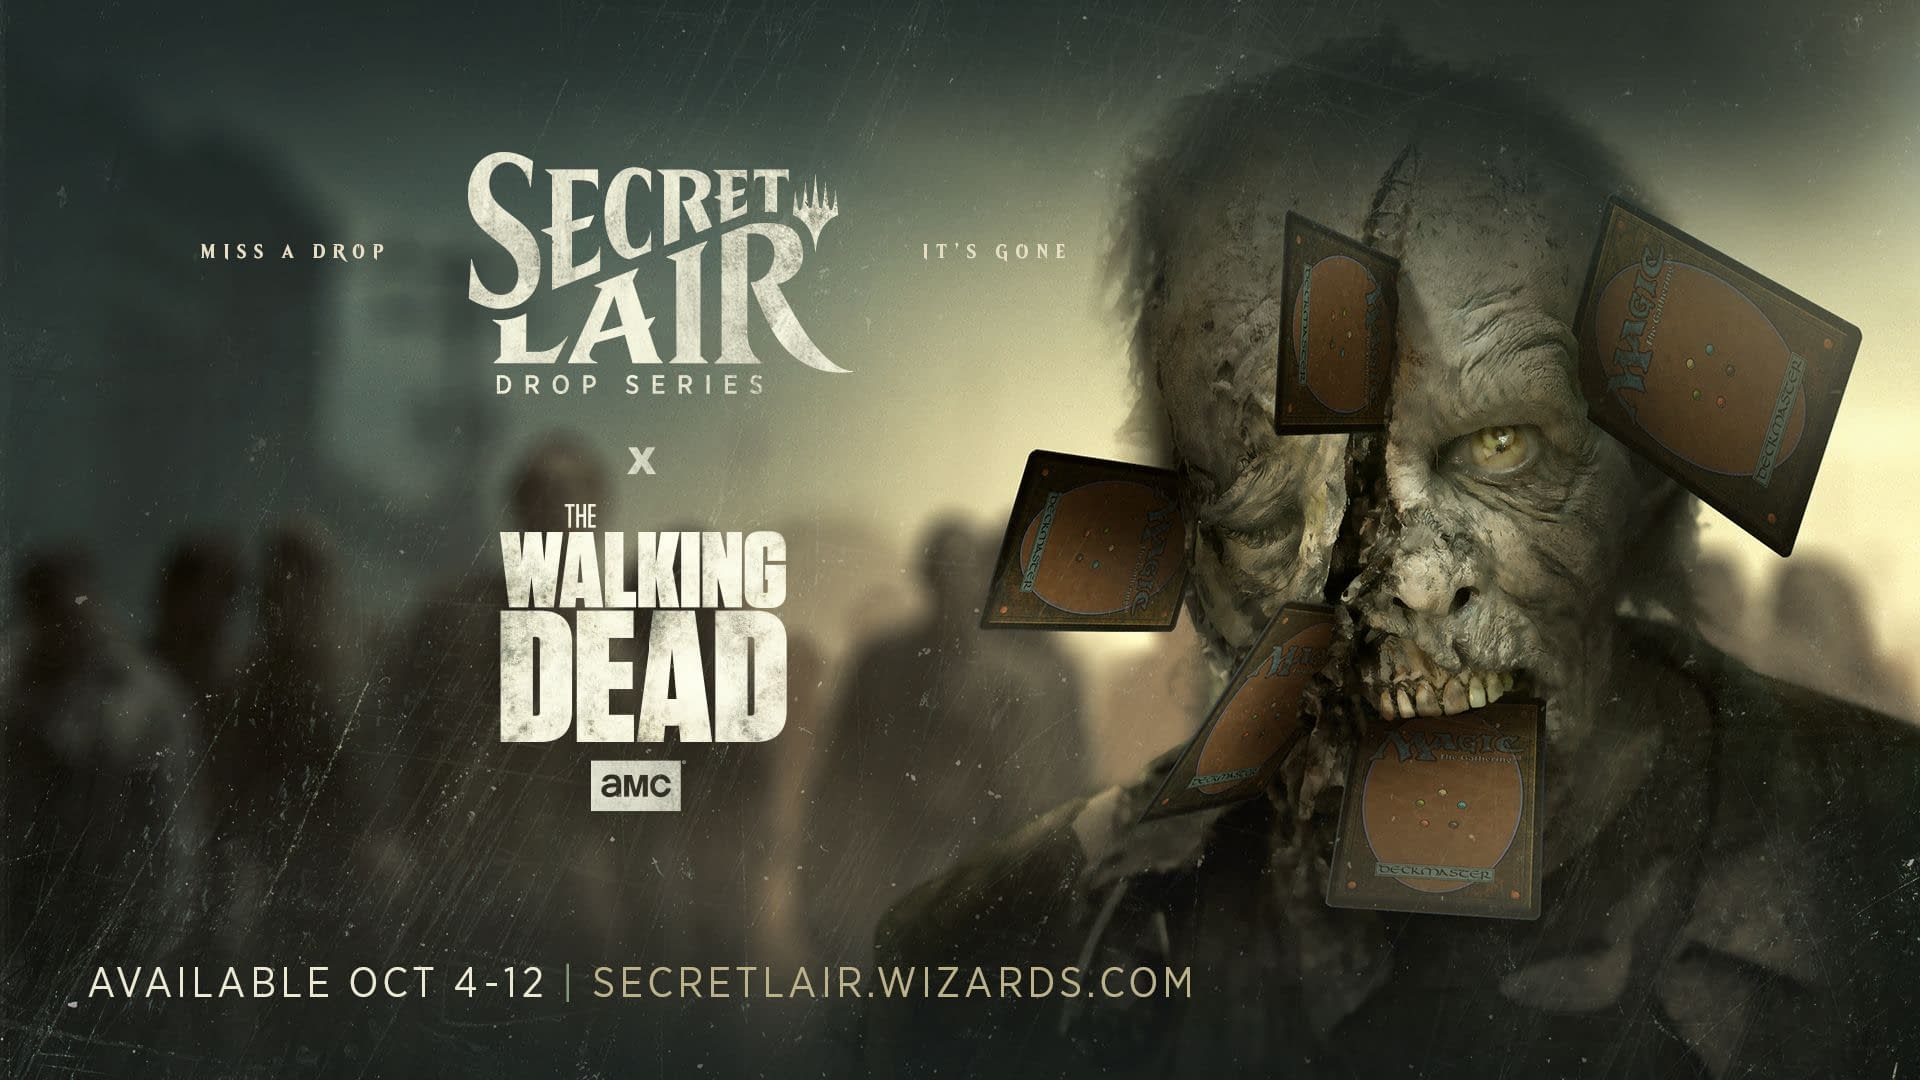 The Walking Dead Invades Magic: The Gathering's Secret Lair